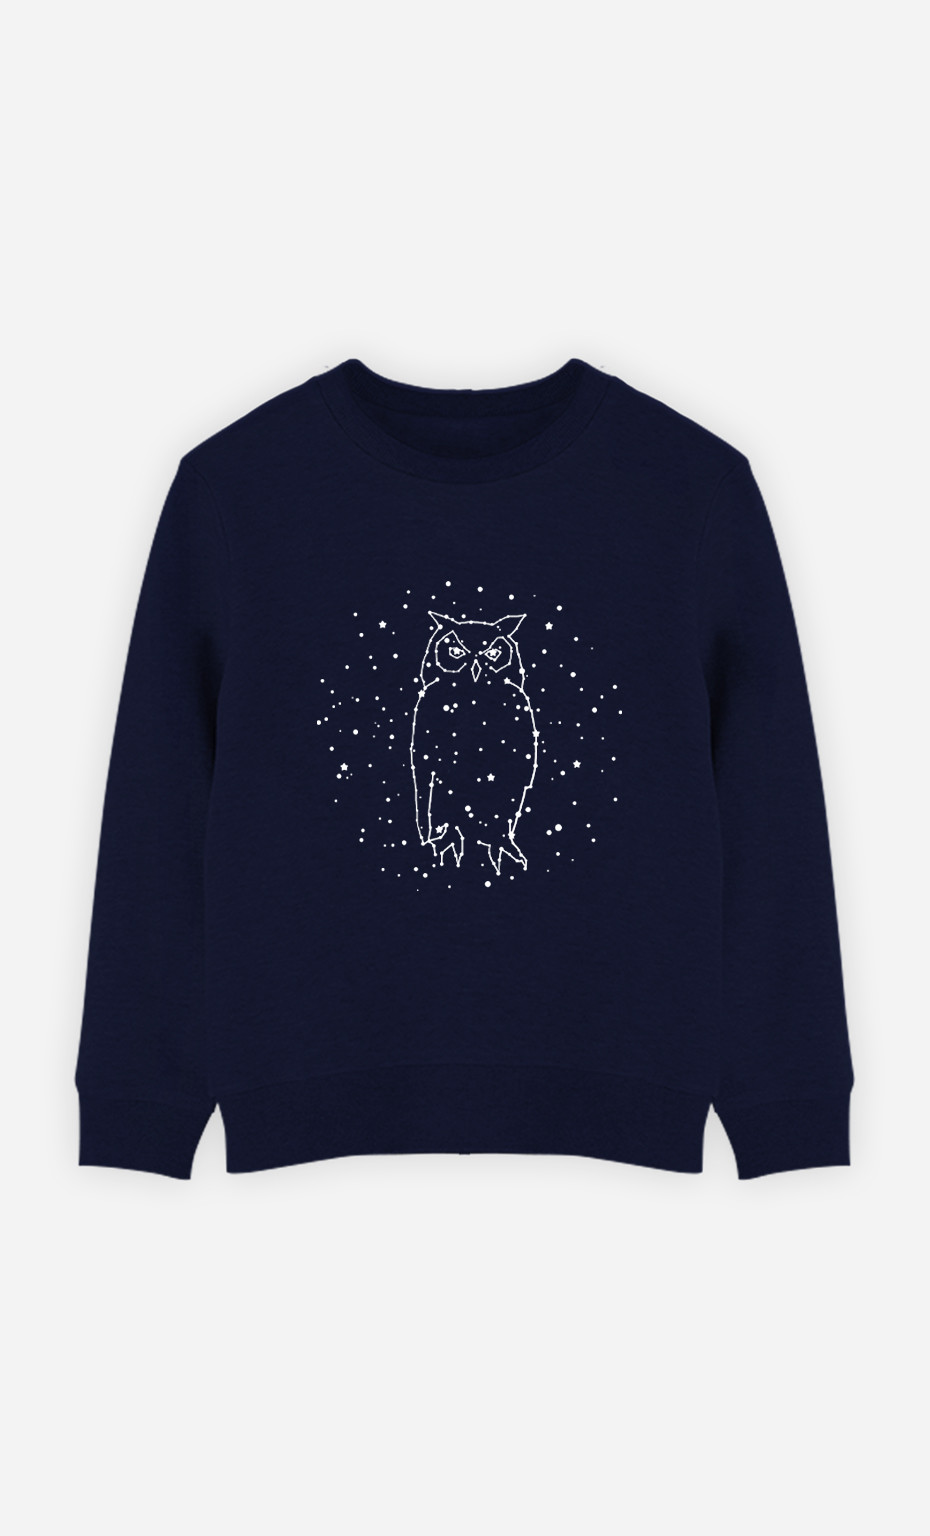 Kinder Sweatshirt Owl Constellation